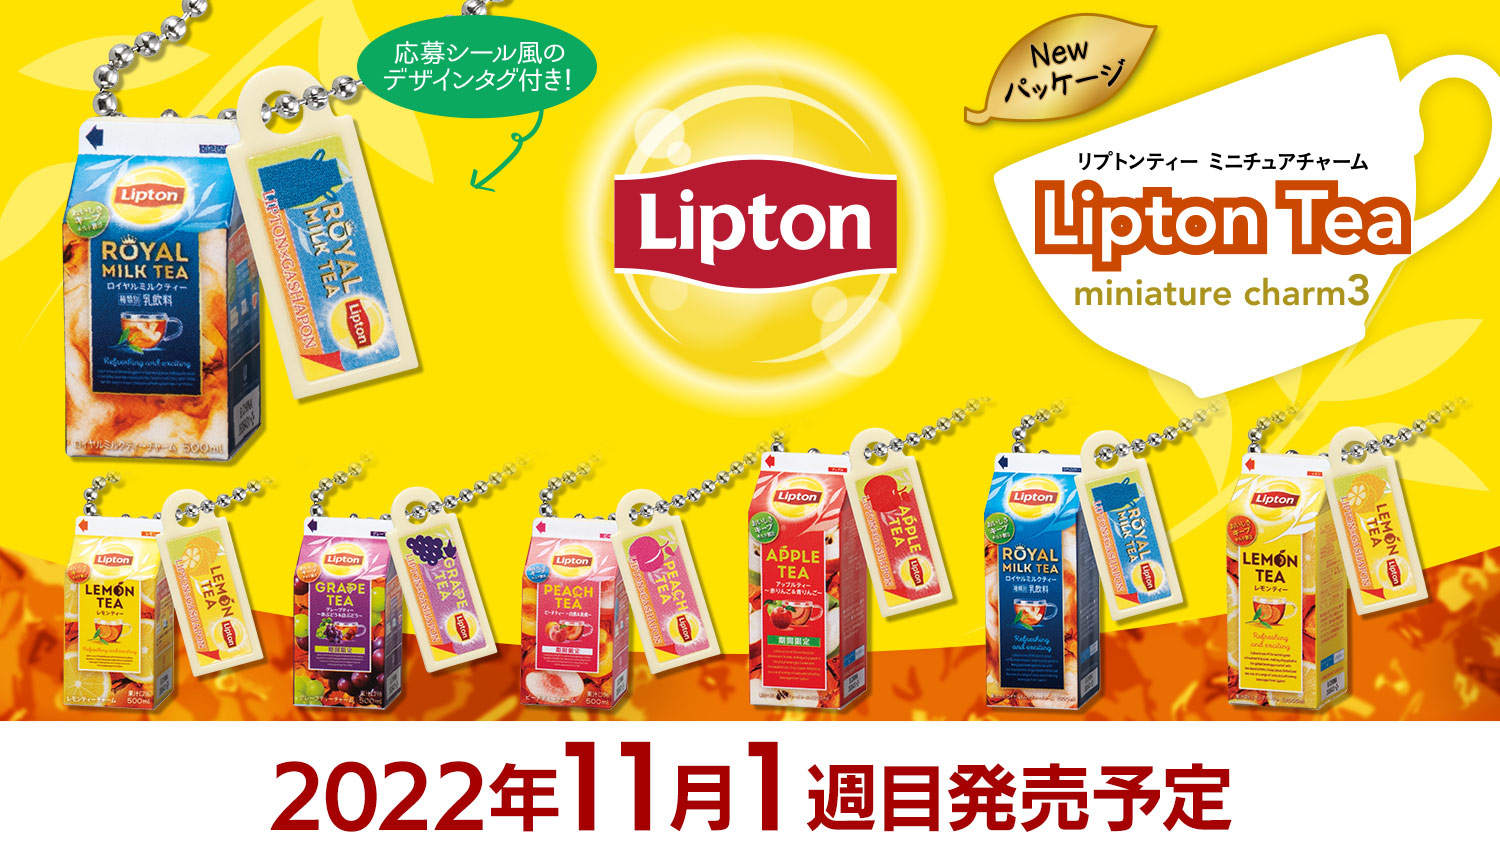 Lipton Tea miniature charm-リプトンティーミニチュアチャーム-３